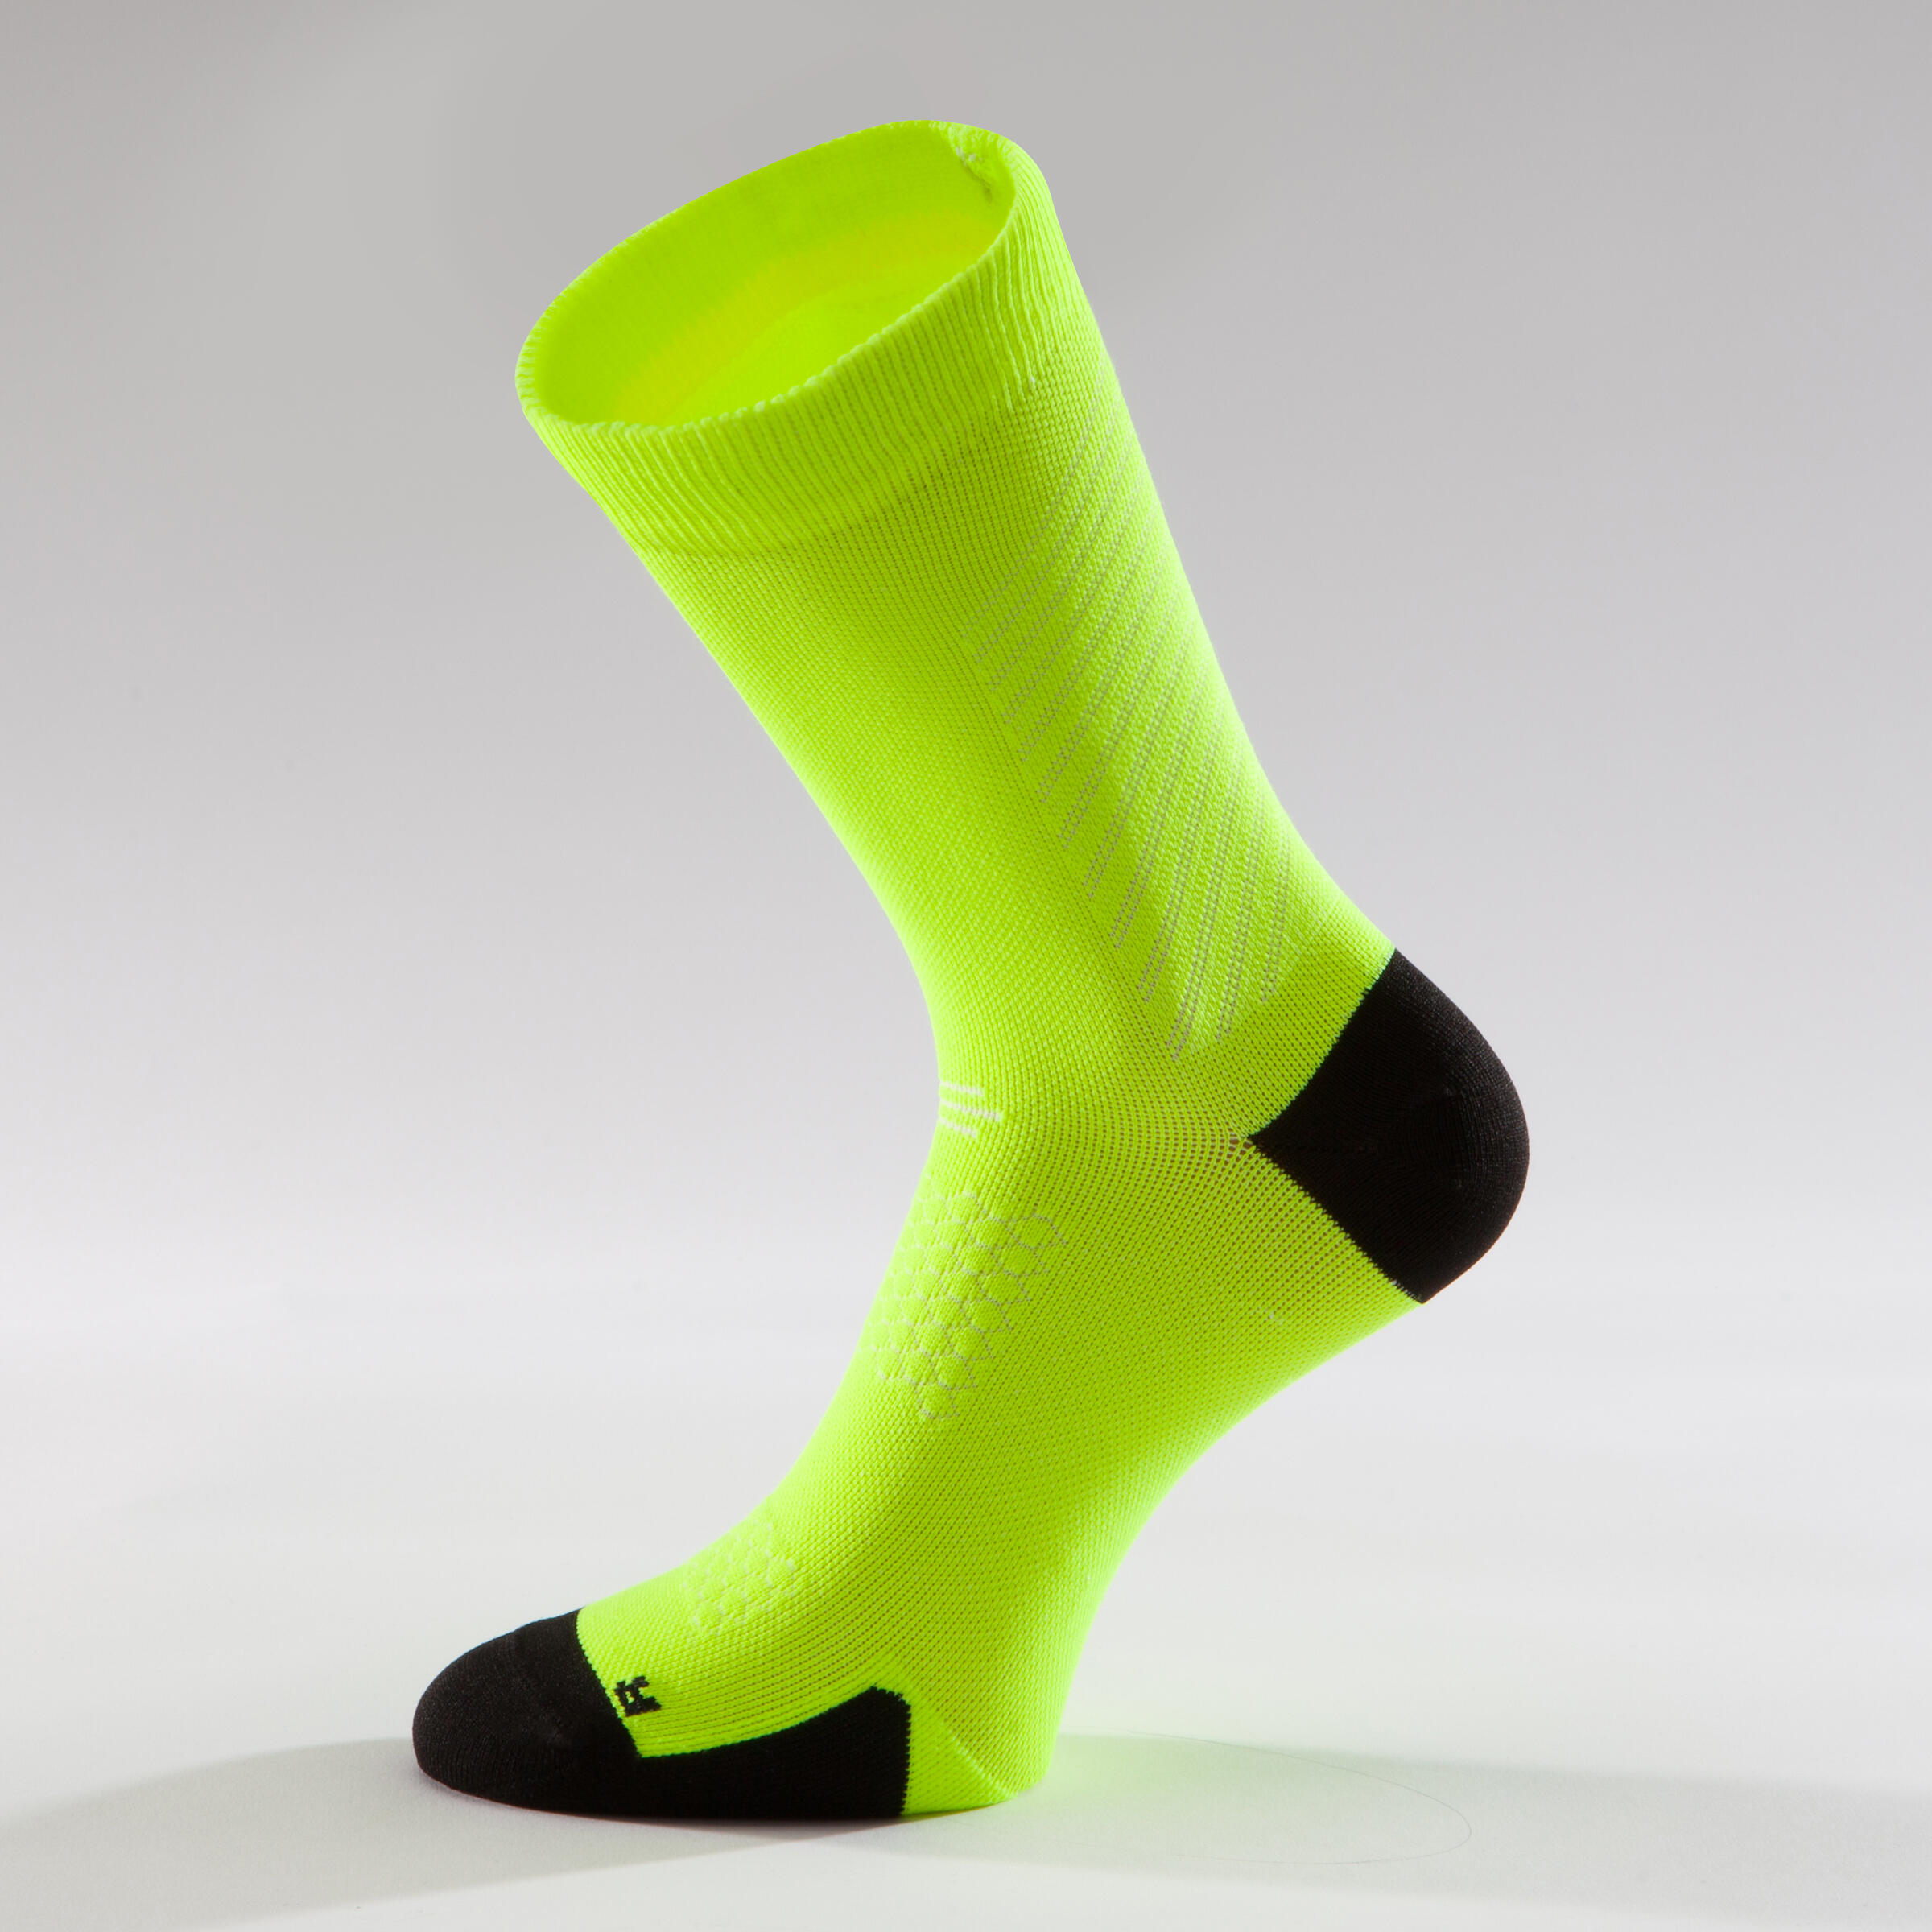 900 Road Cycling Socks - Neon Yellow/Black 5/7